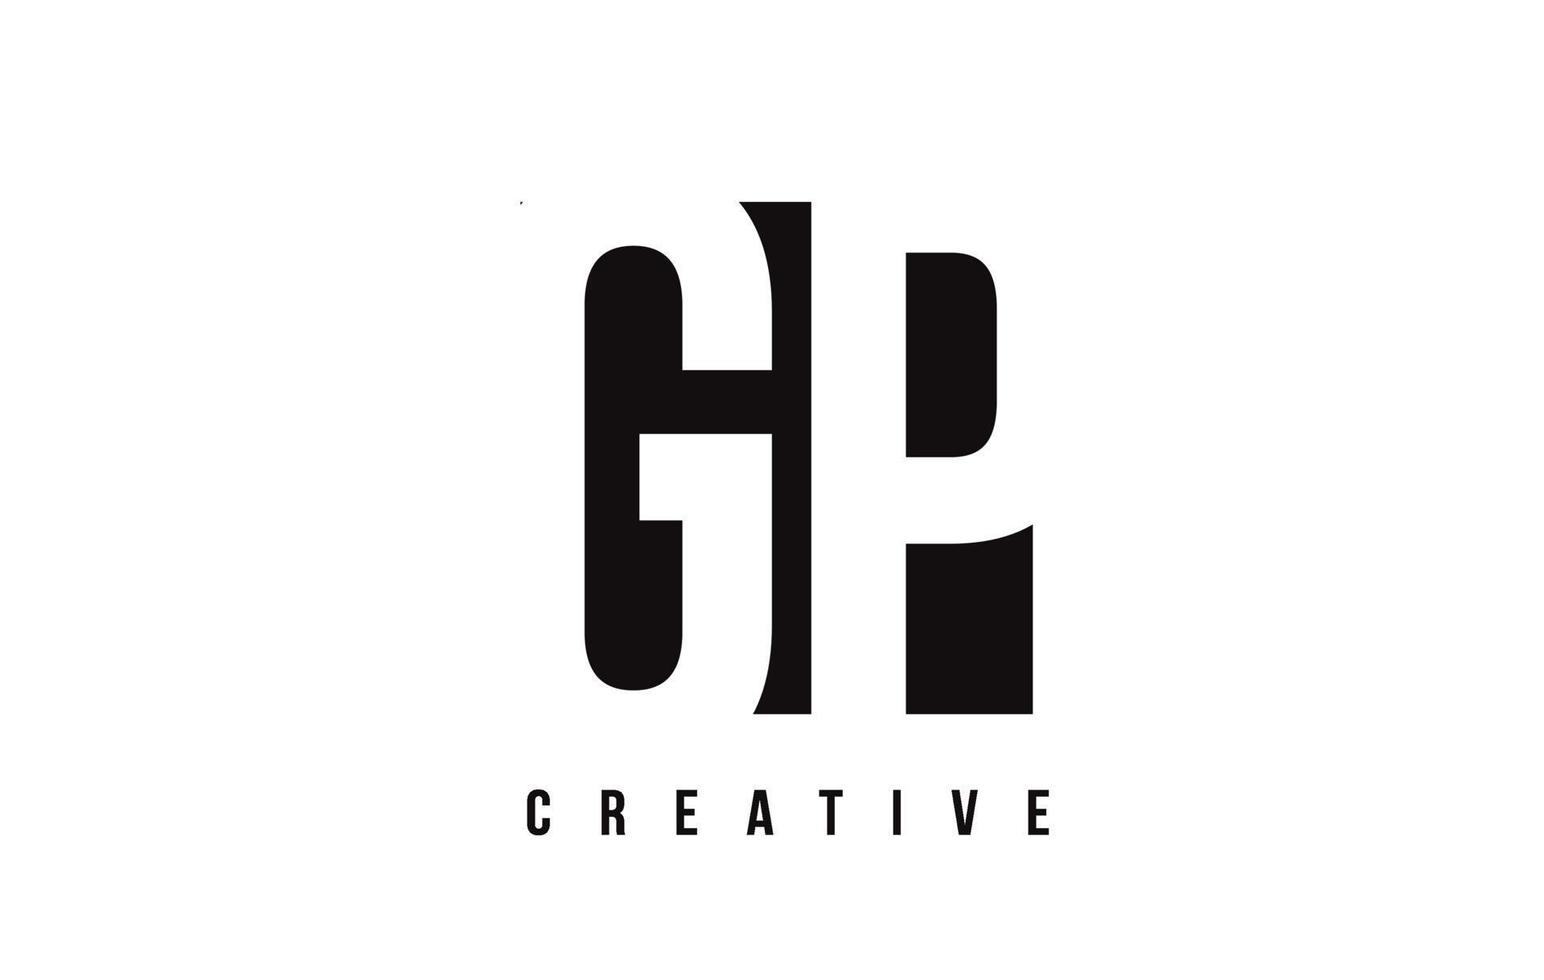 GP G P White Letter Logo Design with Black Square. vector